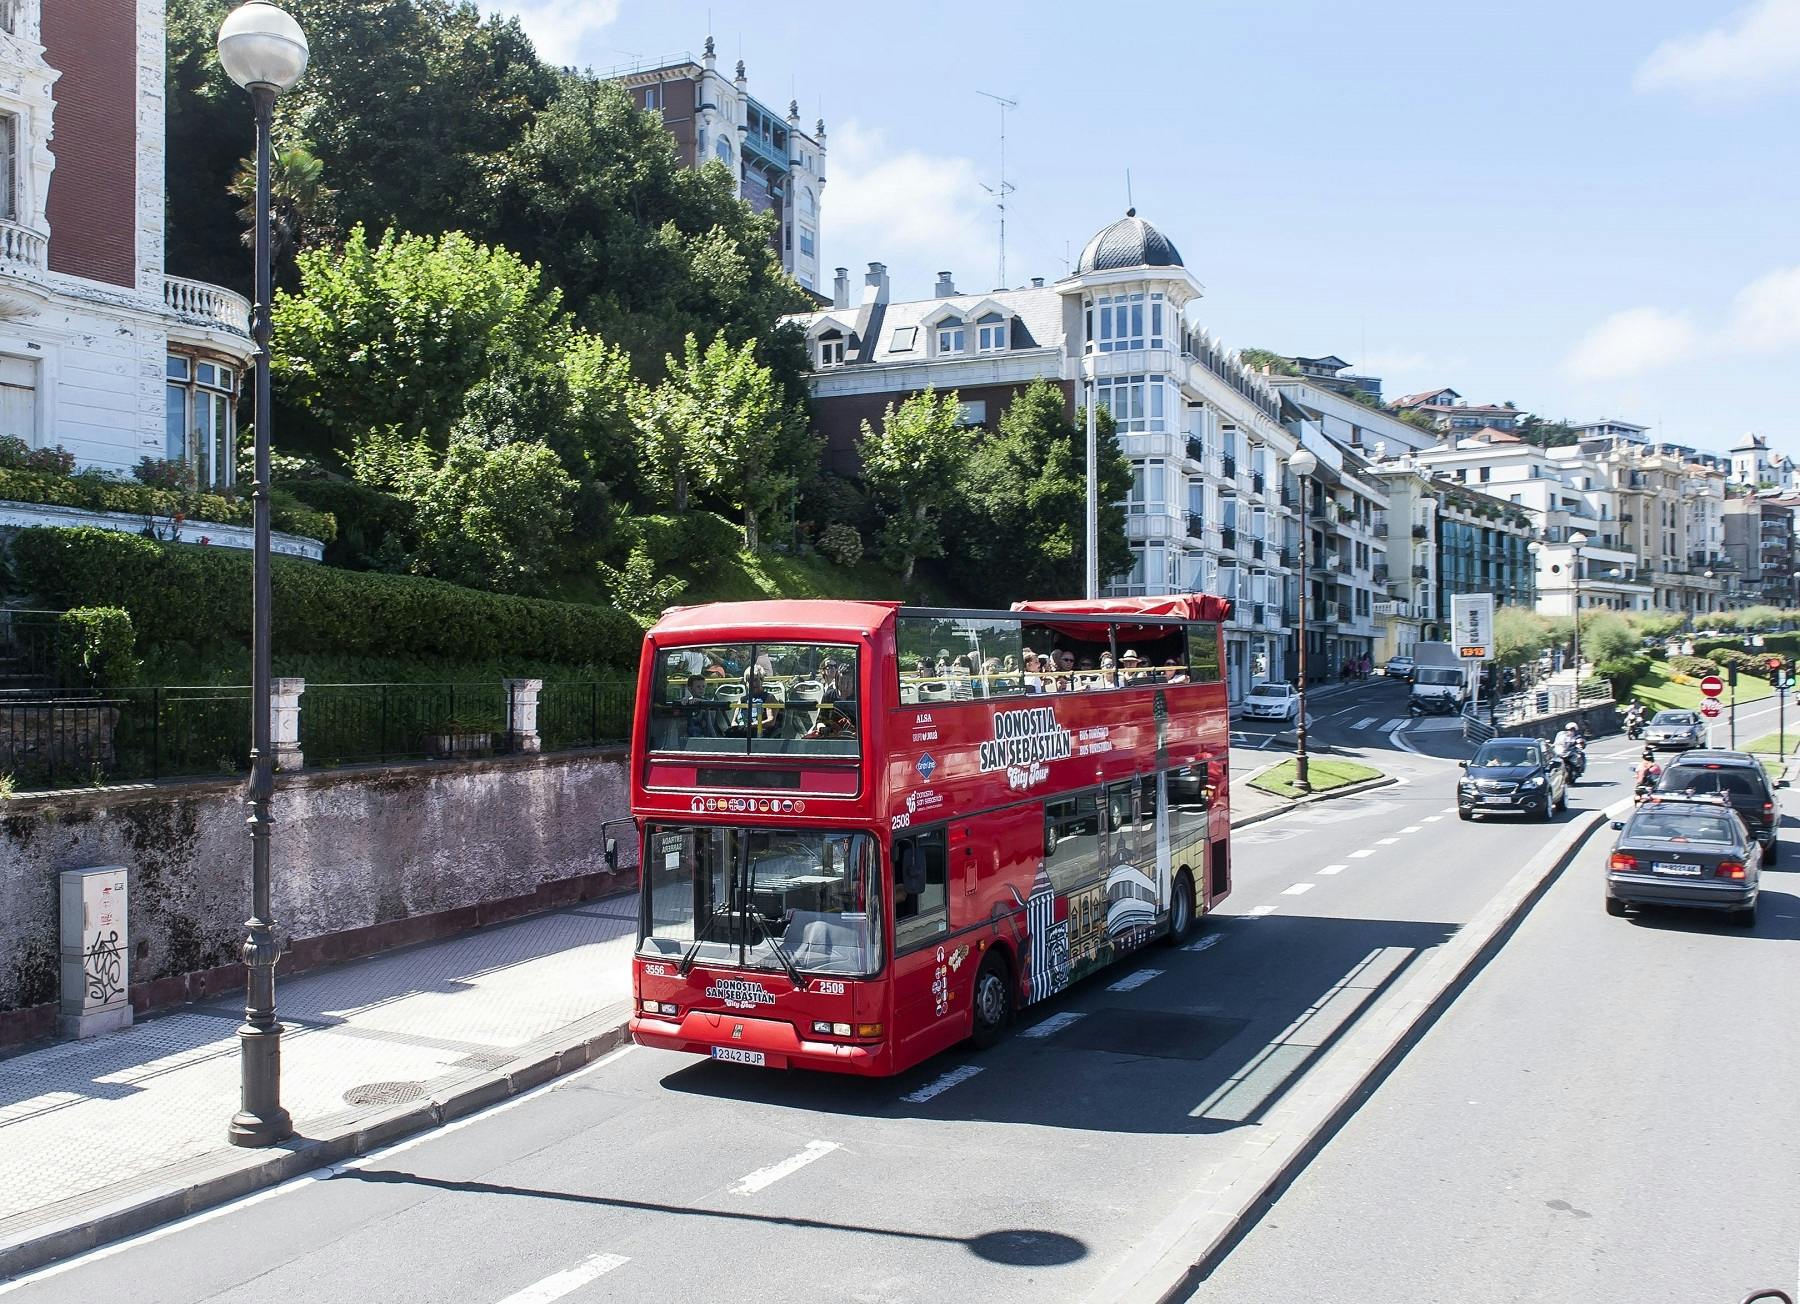 San Sebastian city tour hop-on hop-off bus tickets